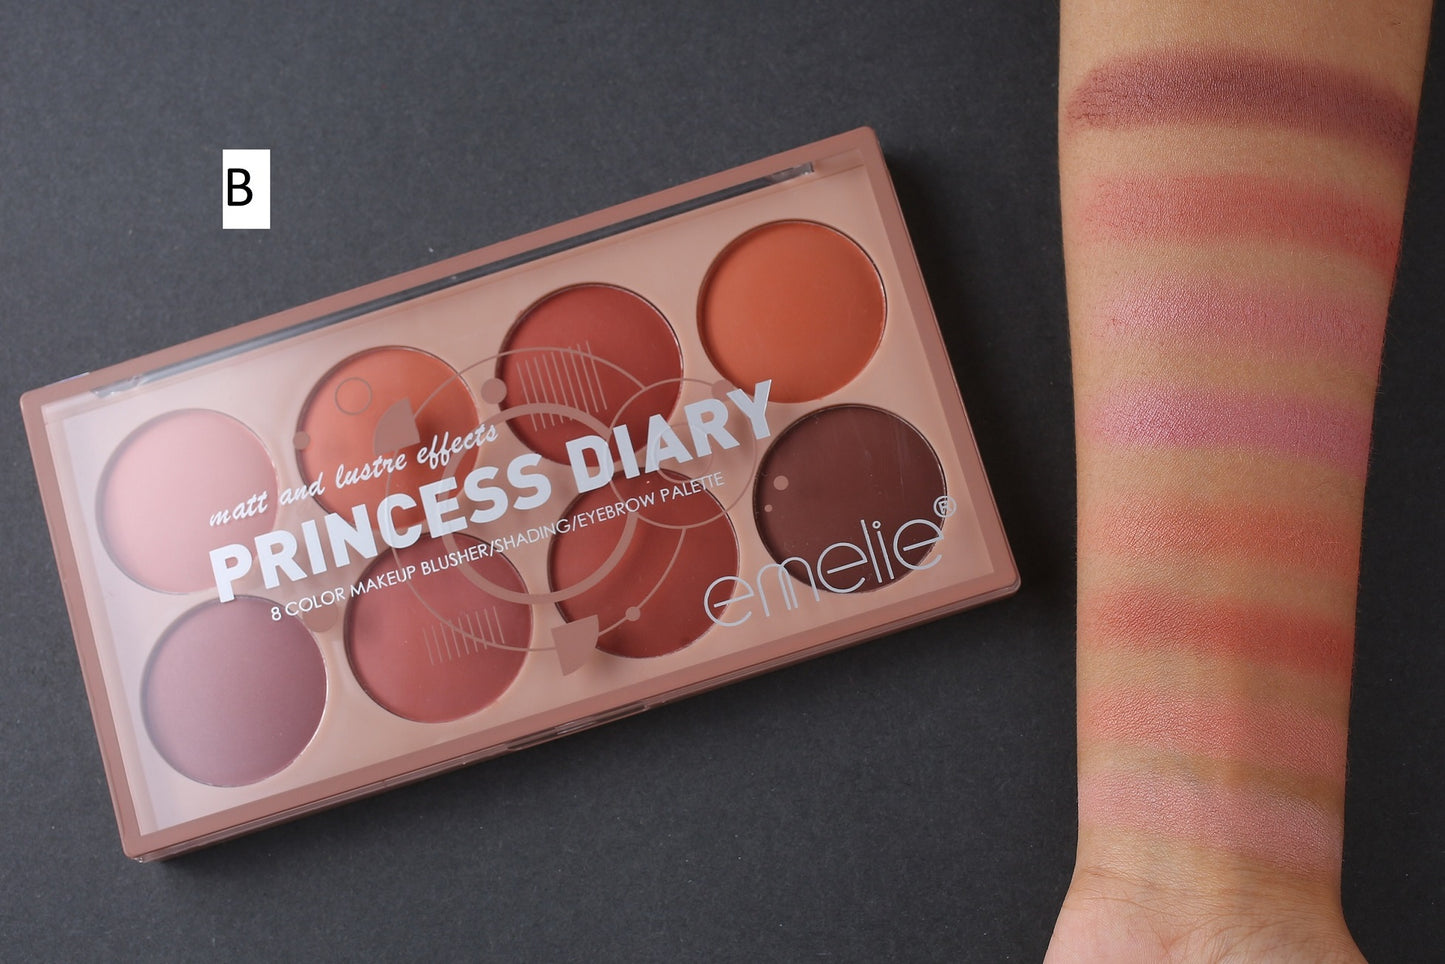 Princess Diary 8 Color Blusher/Eyeshadow